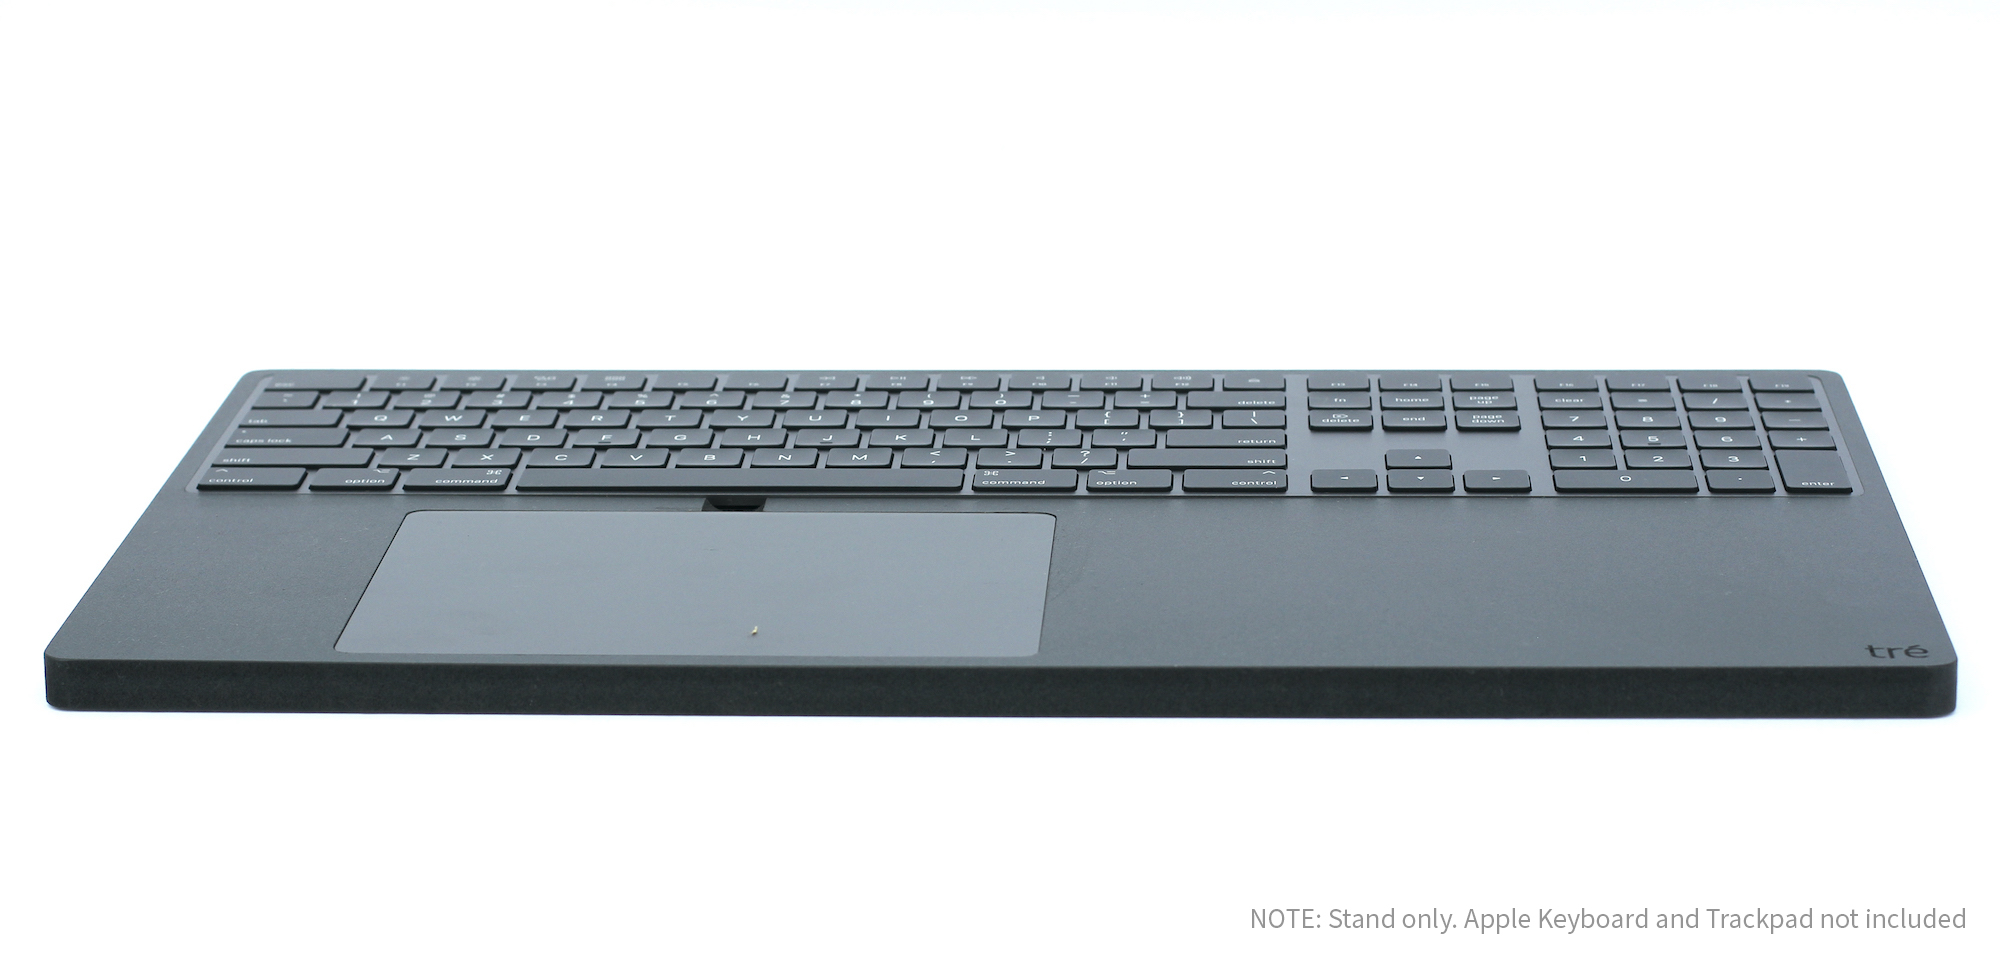 apple keyboard with numeric keypad and trackpad